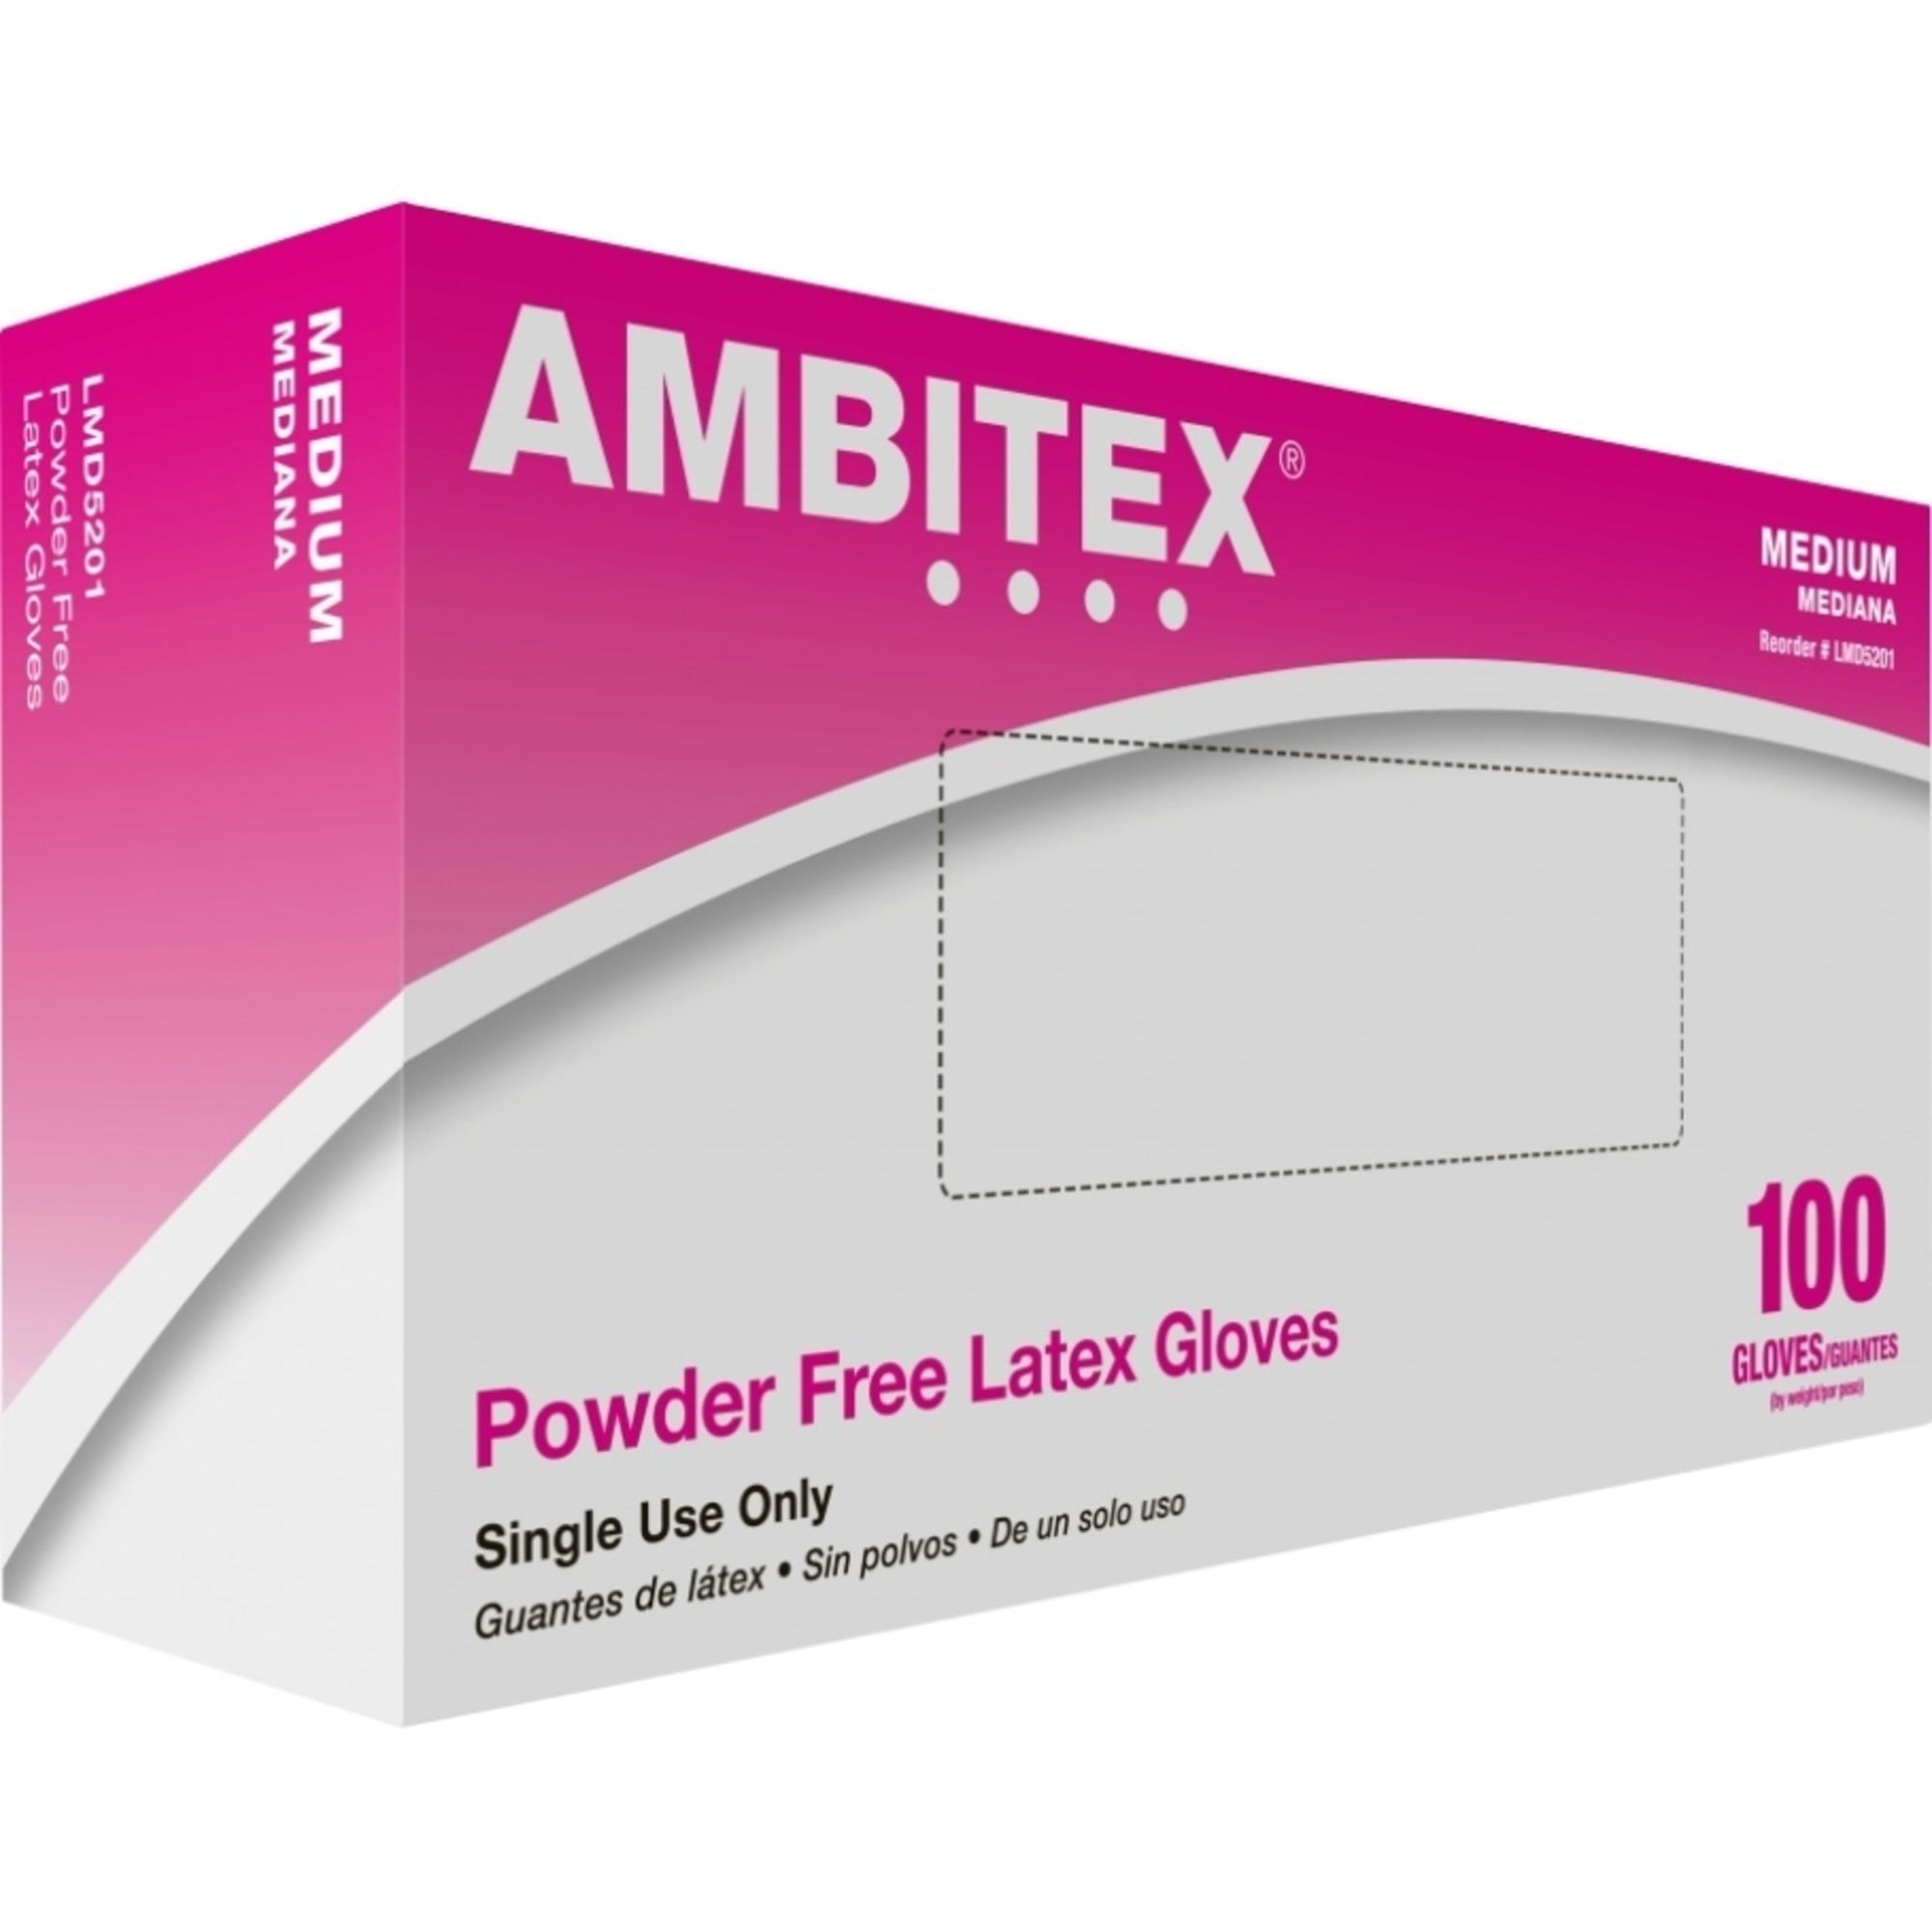 Tradex International Powder-Free Latex Exam Gloves White Medium Box Of 100 by Ambitex 